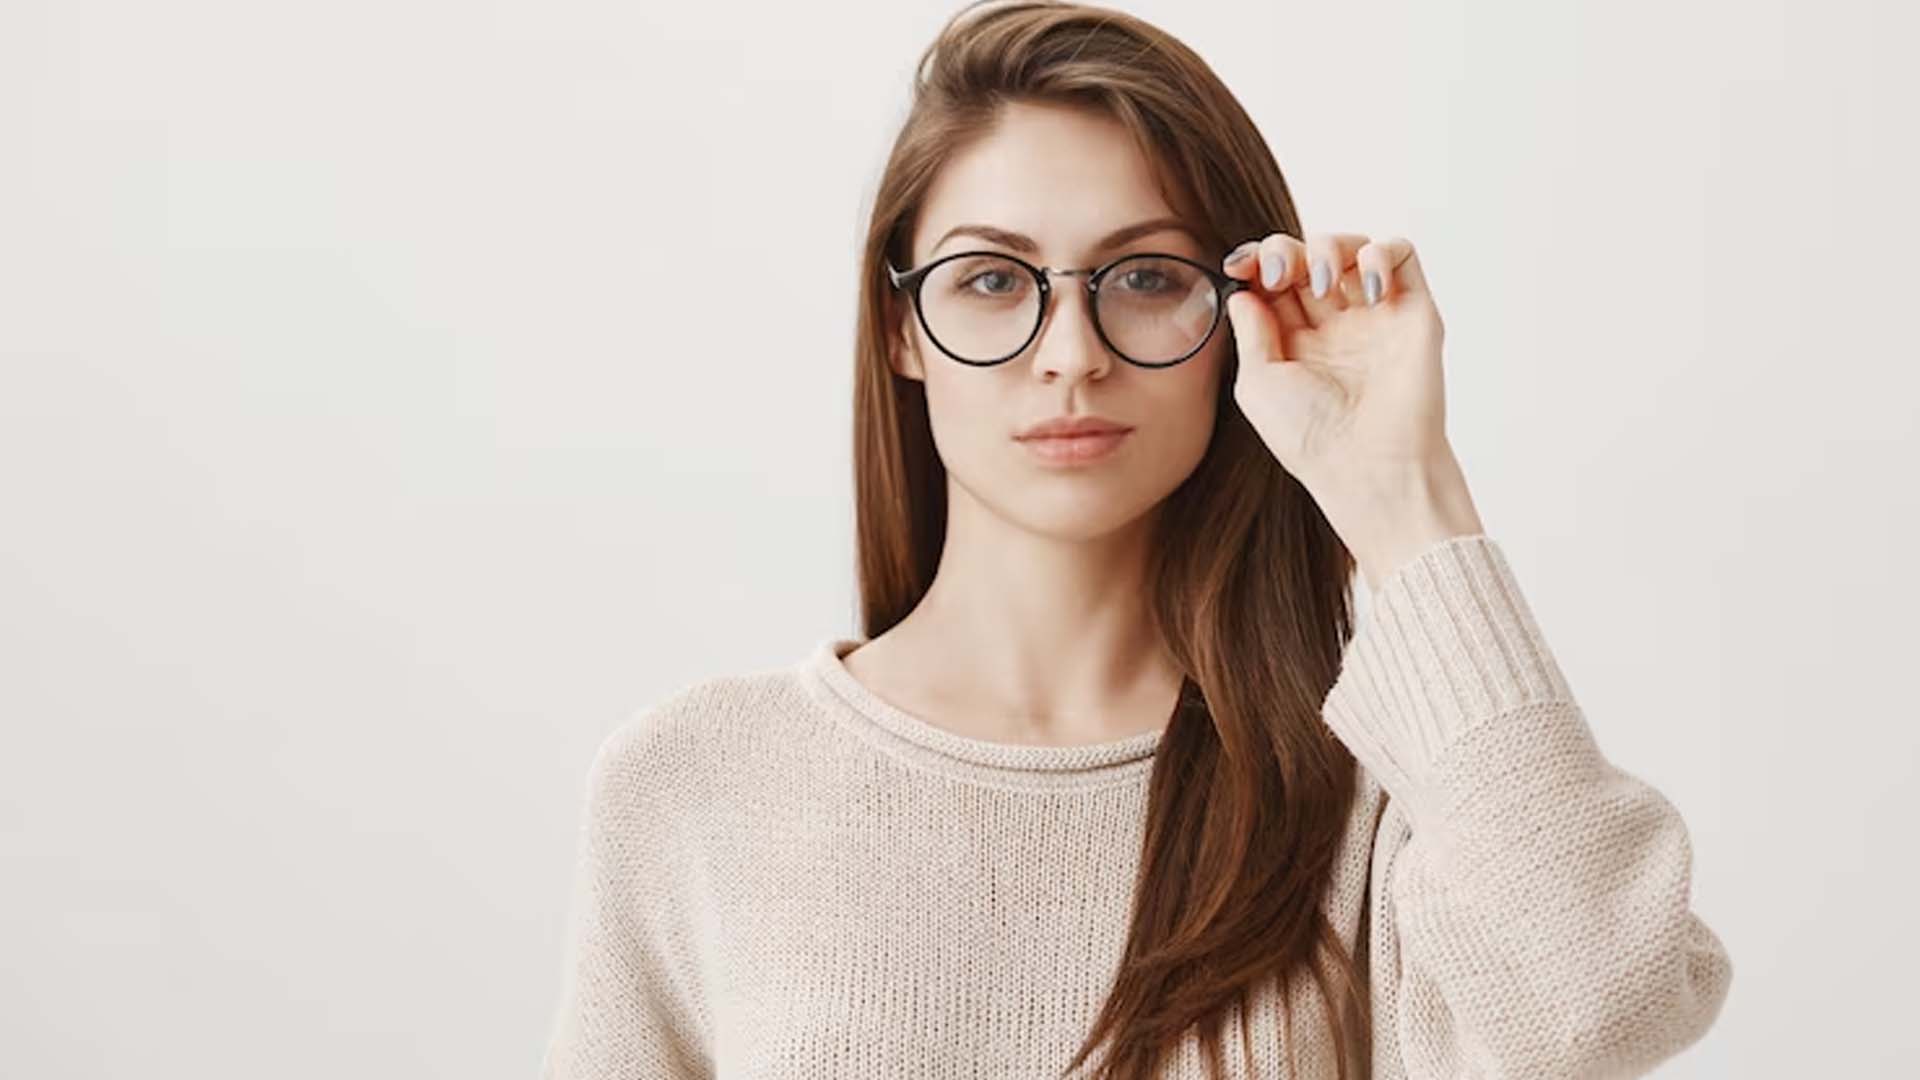 Women showing Specs or Eyeglasses